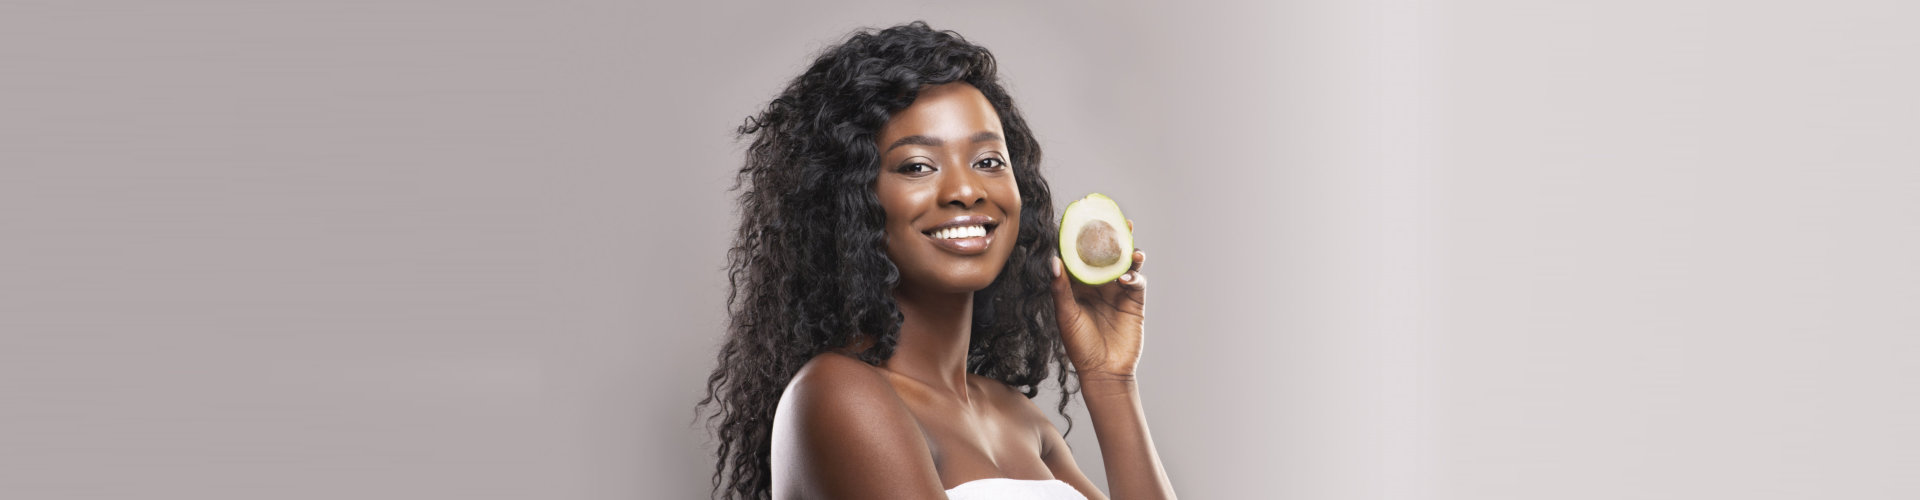 beautiful woman holding an avocado